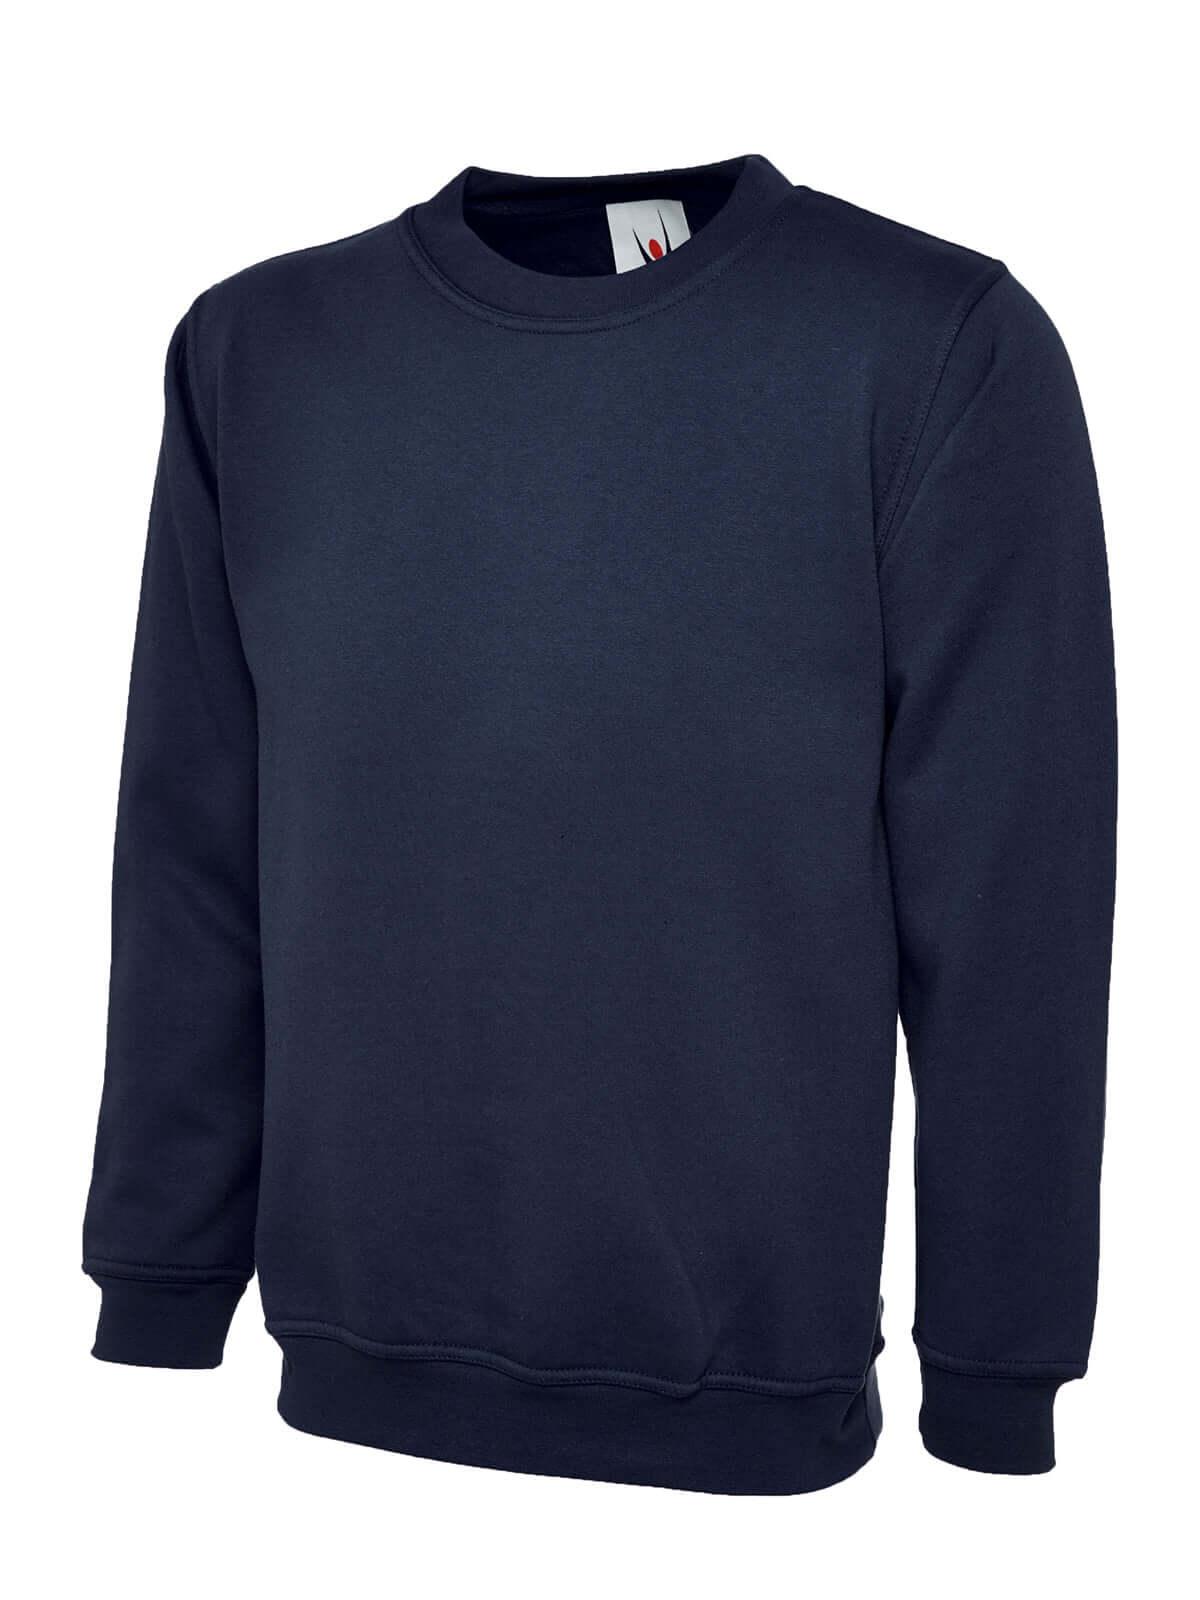 Pegasus Uniform Premium Sweatshirt - Navy Blue